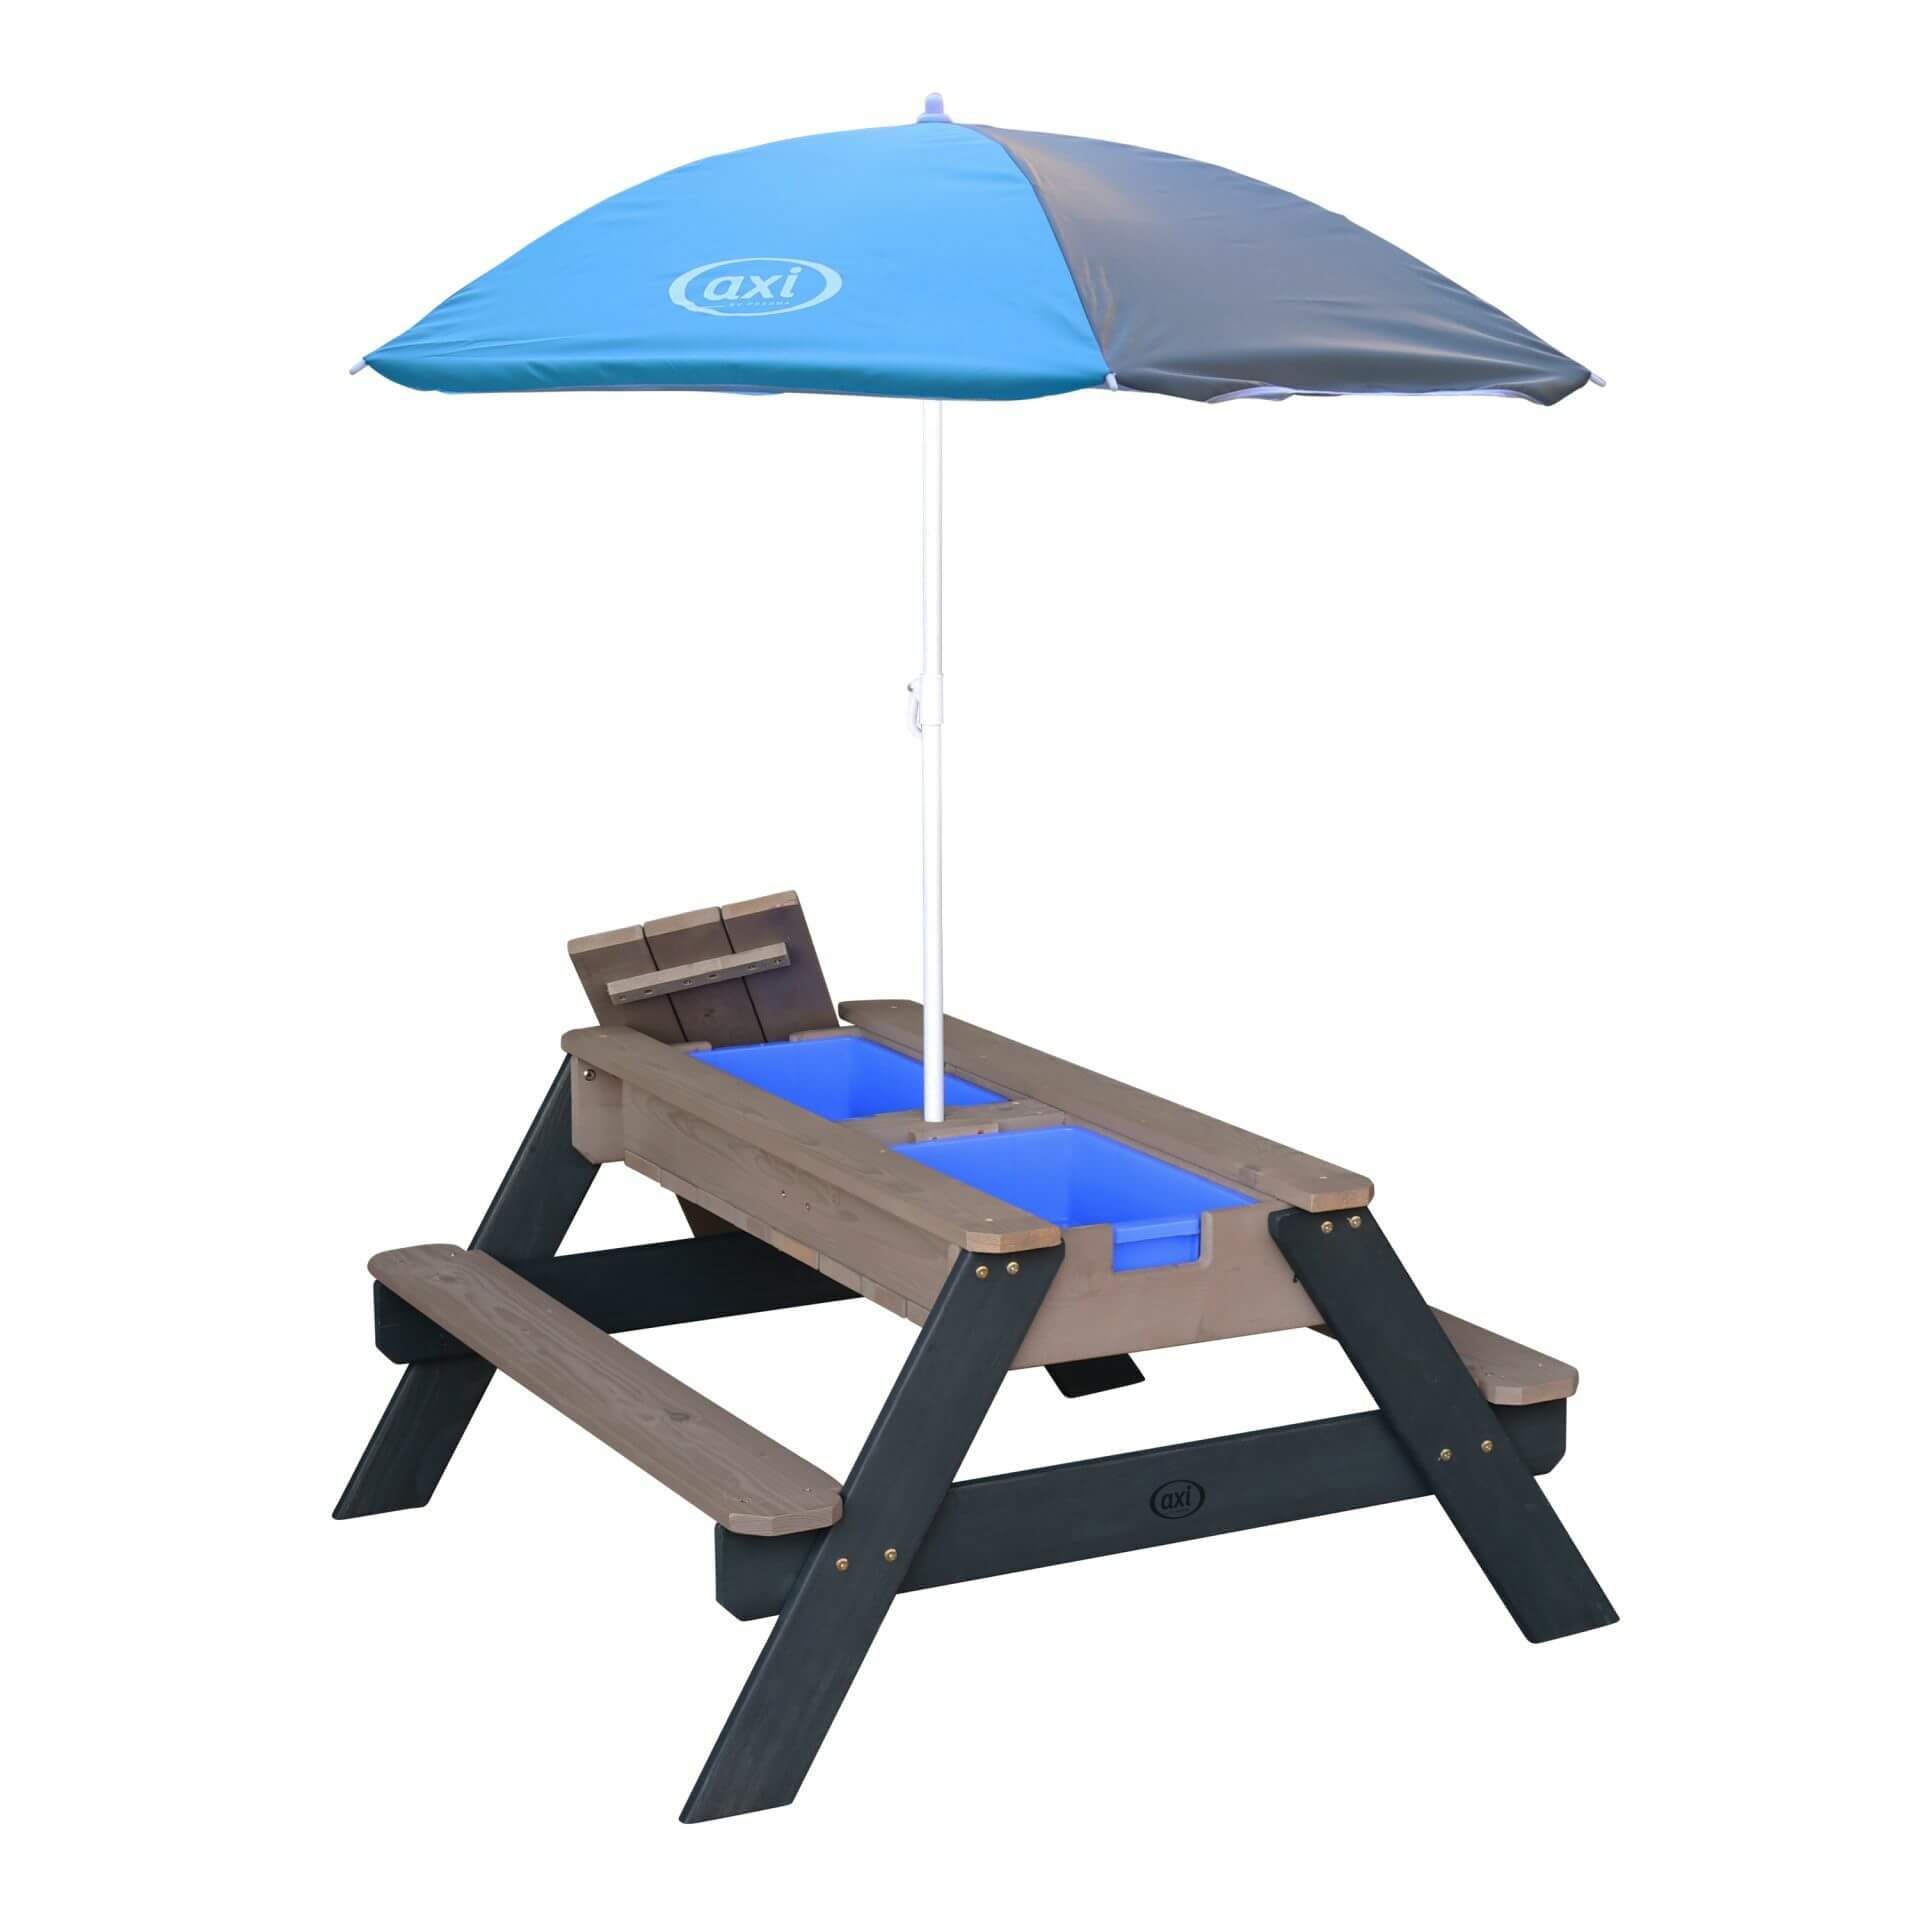 AXI Nick Zand & Water Picknicktafel Antraciet/grijs - Parasol Grijs/blauw